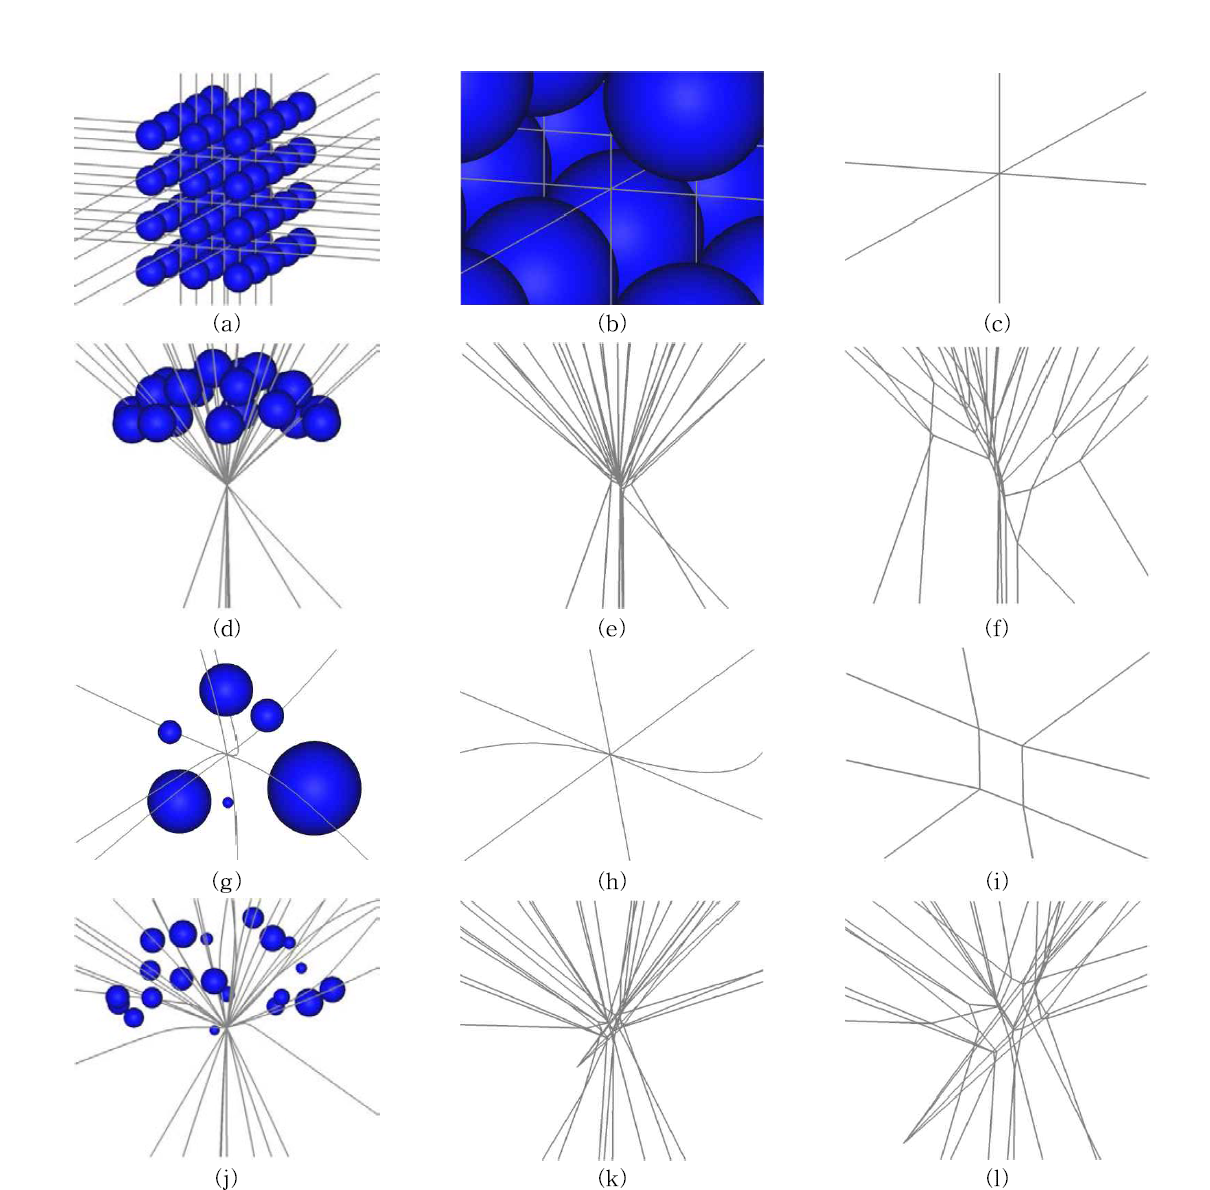 TOI 알고리즘의 degenerate 모델에 대한 계산 결과. 1행 (a)-(c): 3X4X5 grid 모델. 2행 (d)-(f): 반지름 20의 가상의 구(reference sphere)에 접하는 반지름이 동일한 20개의 입력 구(반지름: 2)의 구로 구성된 모델. 3행 (g)-(i): 반지름 10의 가상의 구에 접하는 반지름이 다른 크기의 6개의 구로 구성된 모델 (입력 구의 반지름 범위: [1, 10]). 4행 (j)-(l) 반지름 20의 가상의 구에 접하는 반지름이 다른 20개의 구로 구성된 모델 (입력 구의 반지름 범위: [1, 3]). 1열: 입력 구 모델과 Voronoi diagrams. 2열: degenerate 부분의 확대(소). 3열: degenerate 부분의 확대(대)